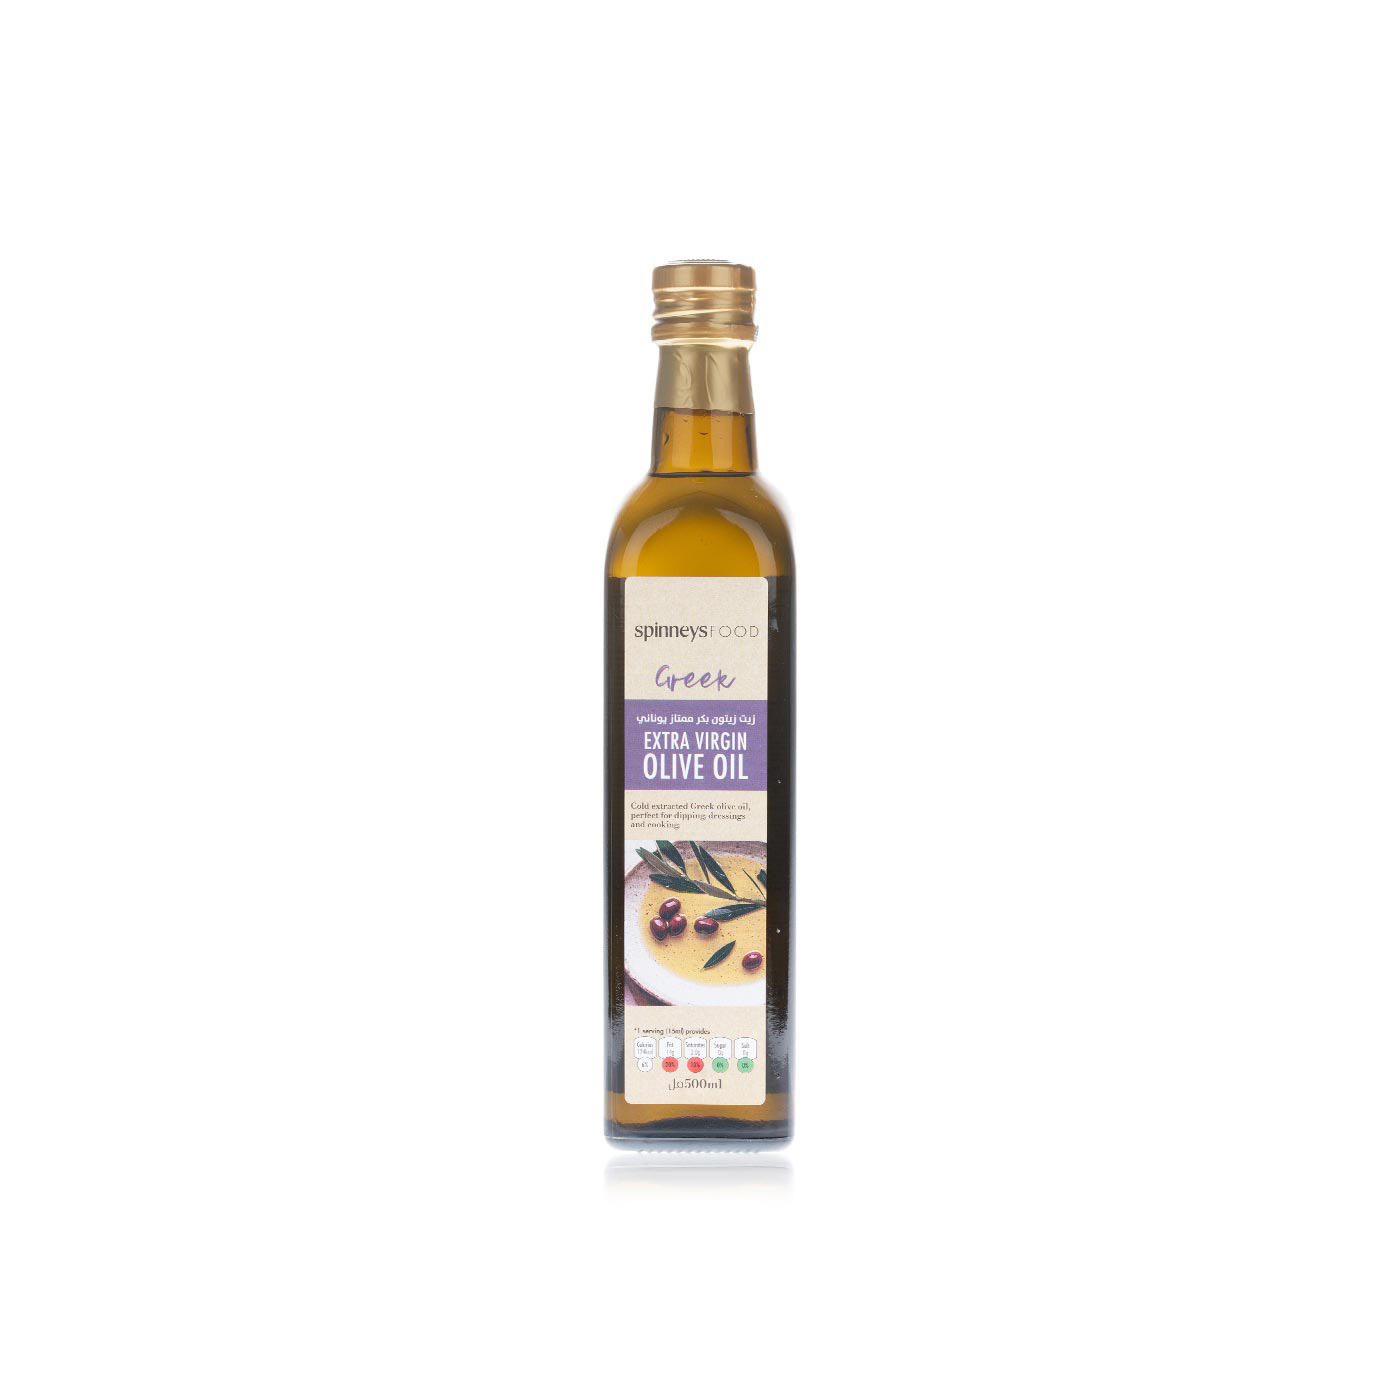 SpinneysFOOD Greek Extra Virgin Olive Oil 500ml - Spinneys UAE